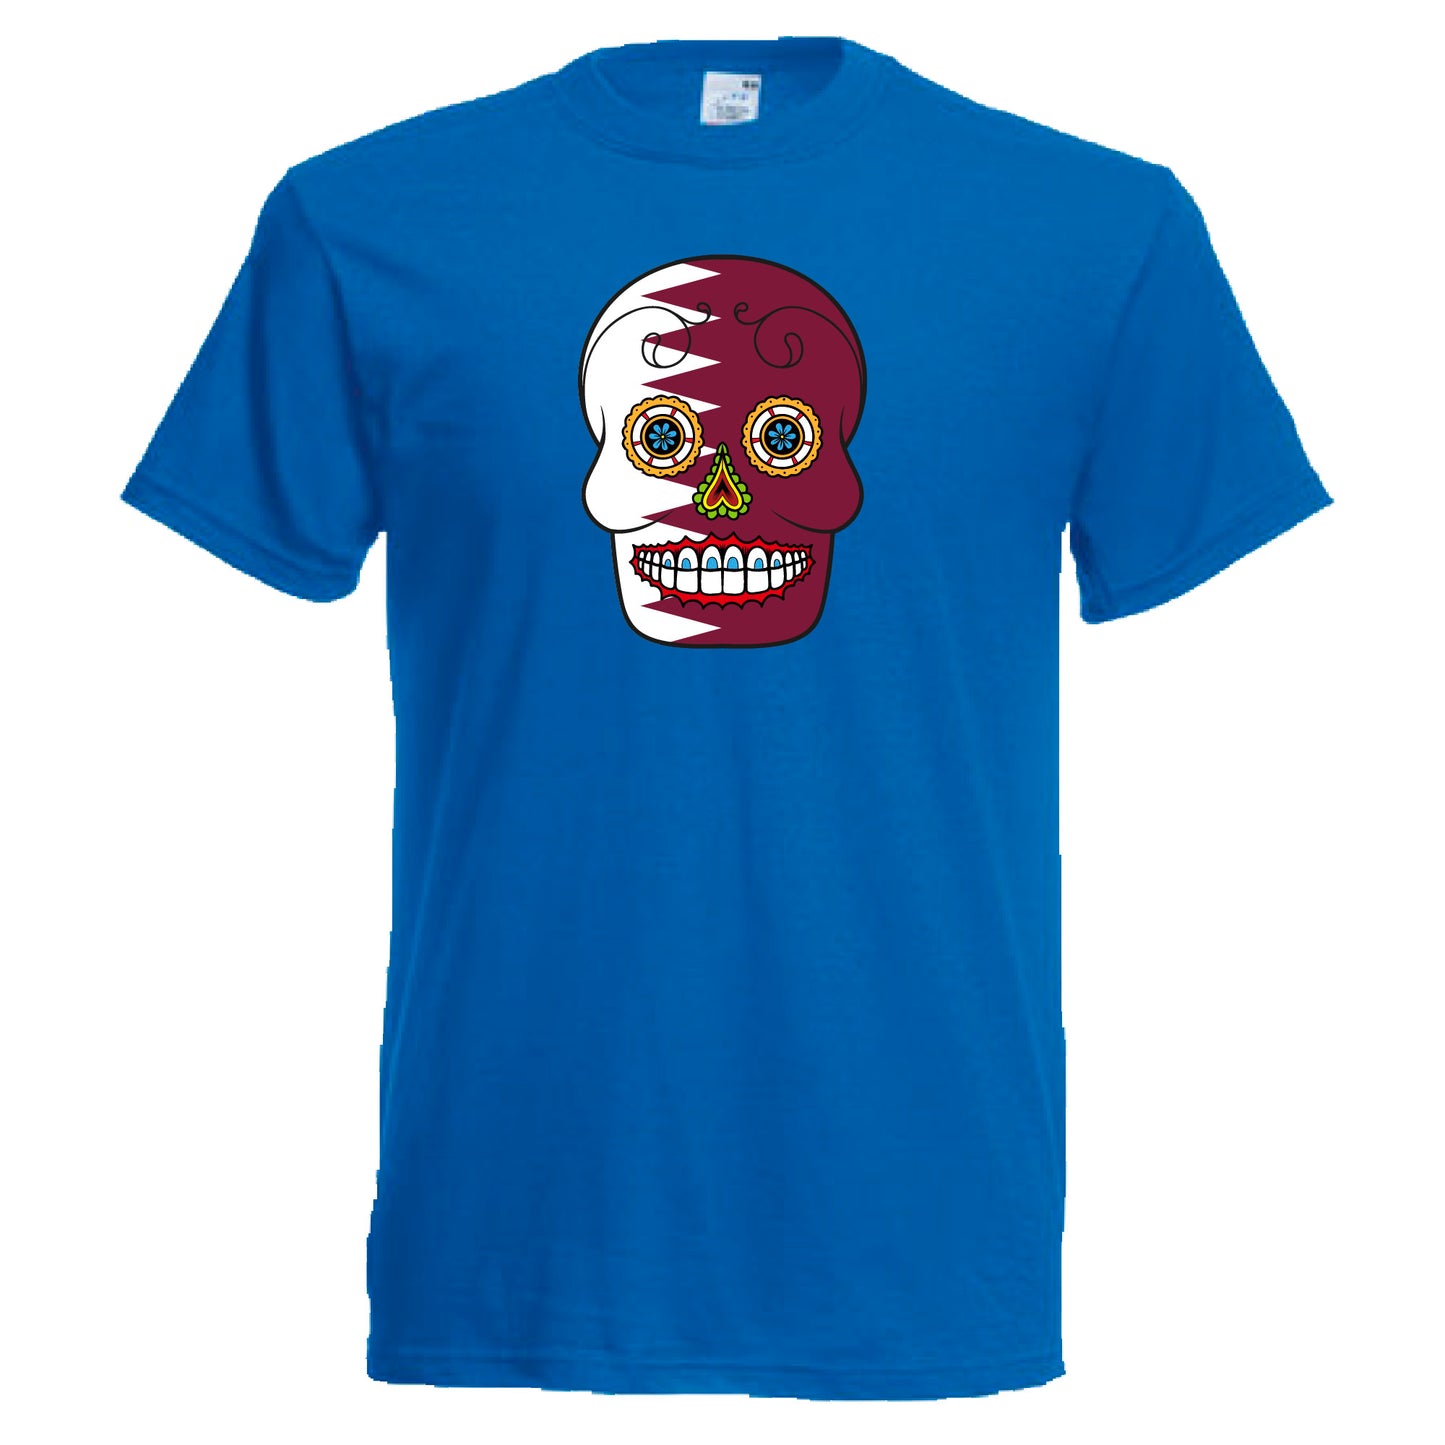 INDIGOS UG - T-Shirt Herren - Katar - Skull - Fussball